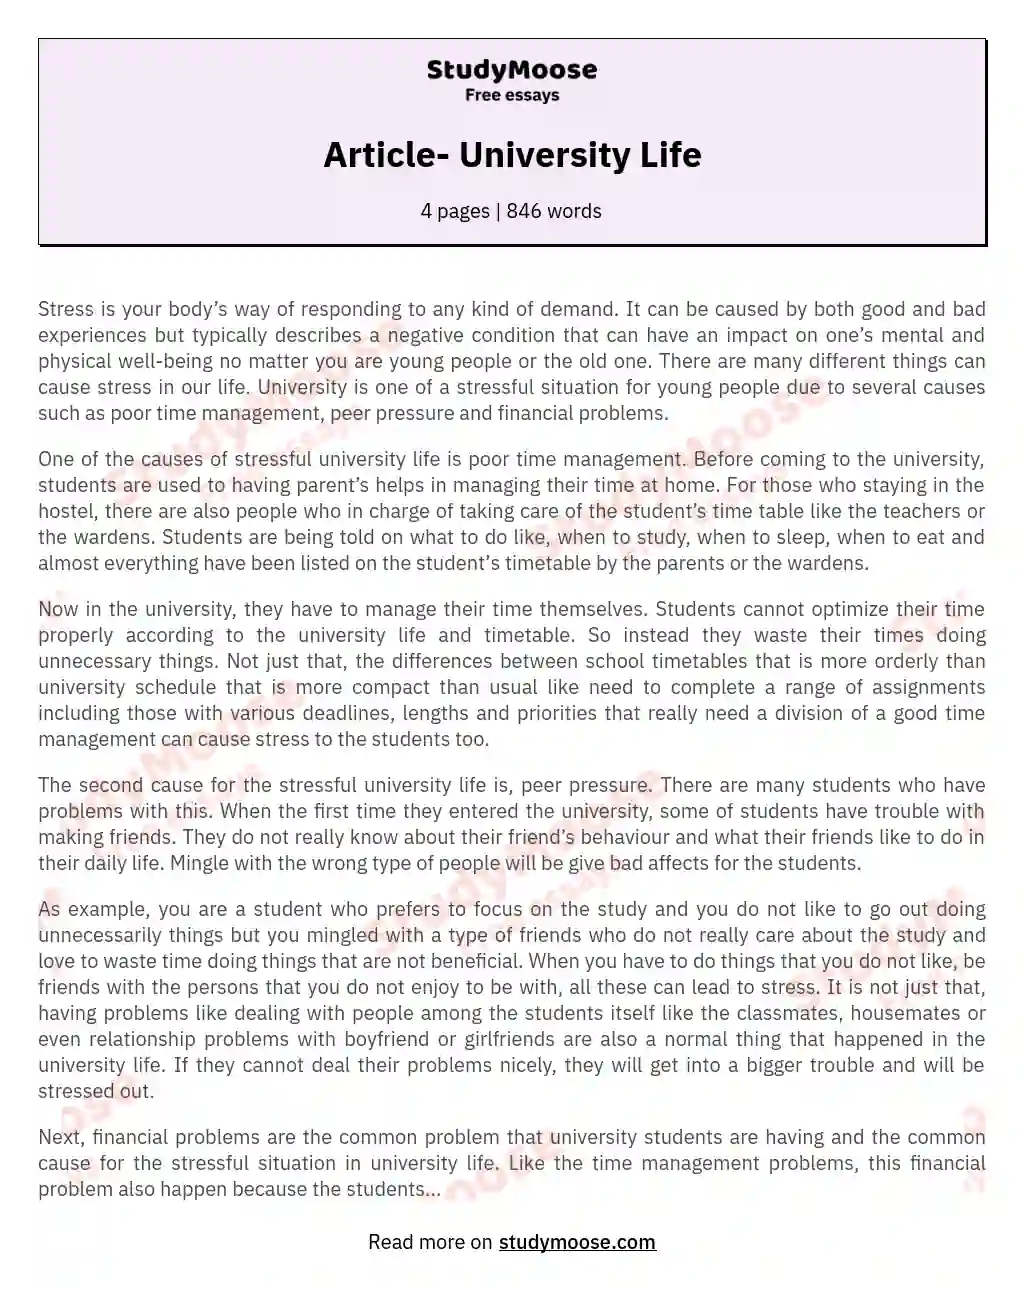 Article- University Life essay